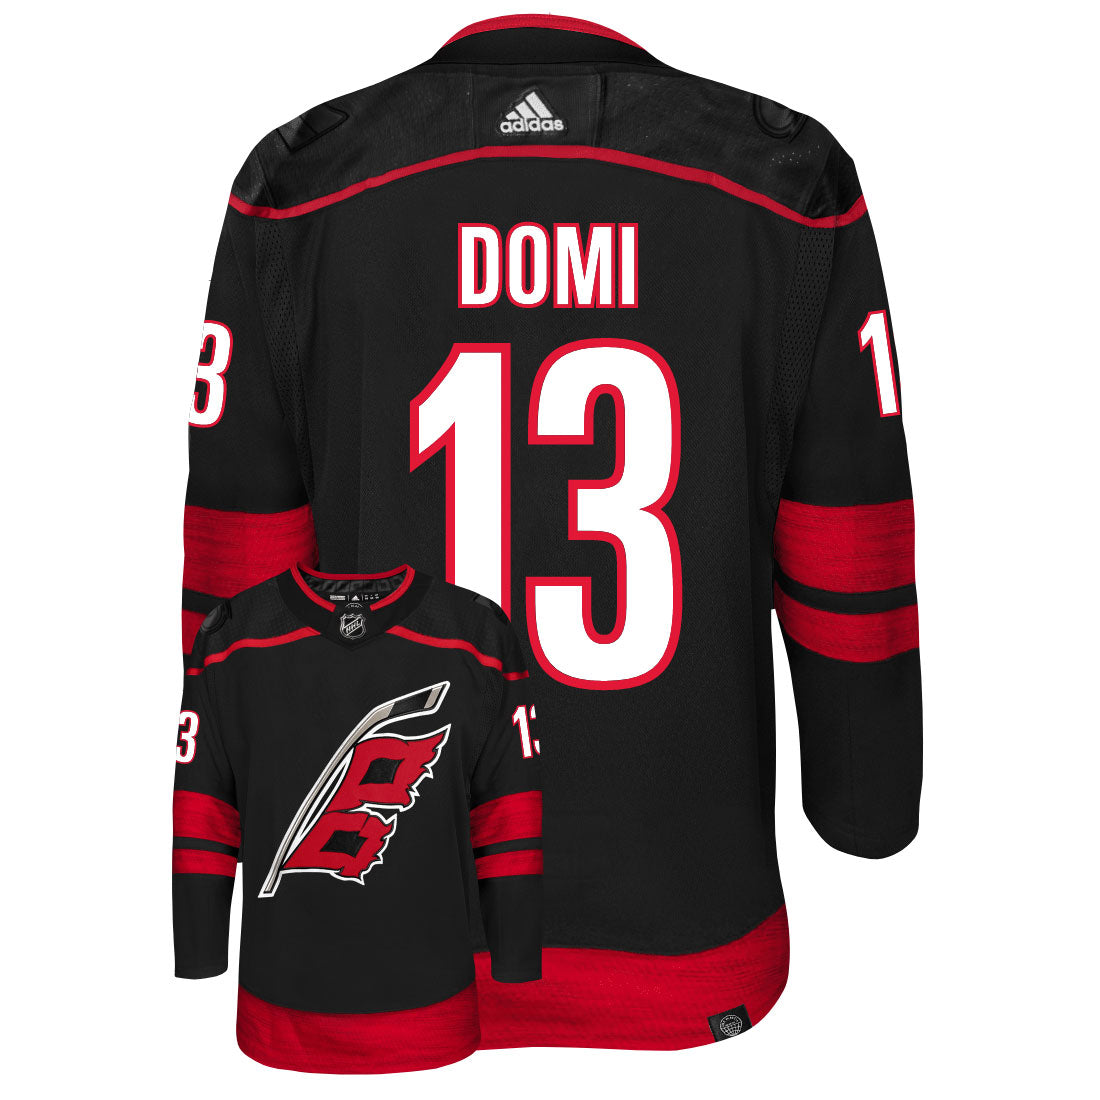 Max Domi Carolina Hurricanes Adidas Primegreen Authentic Third Alternate NHL Hockey Jersey - Back/Front View